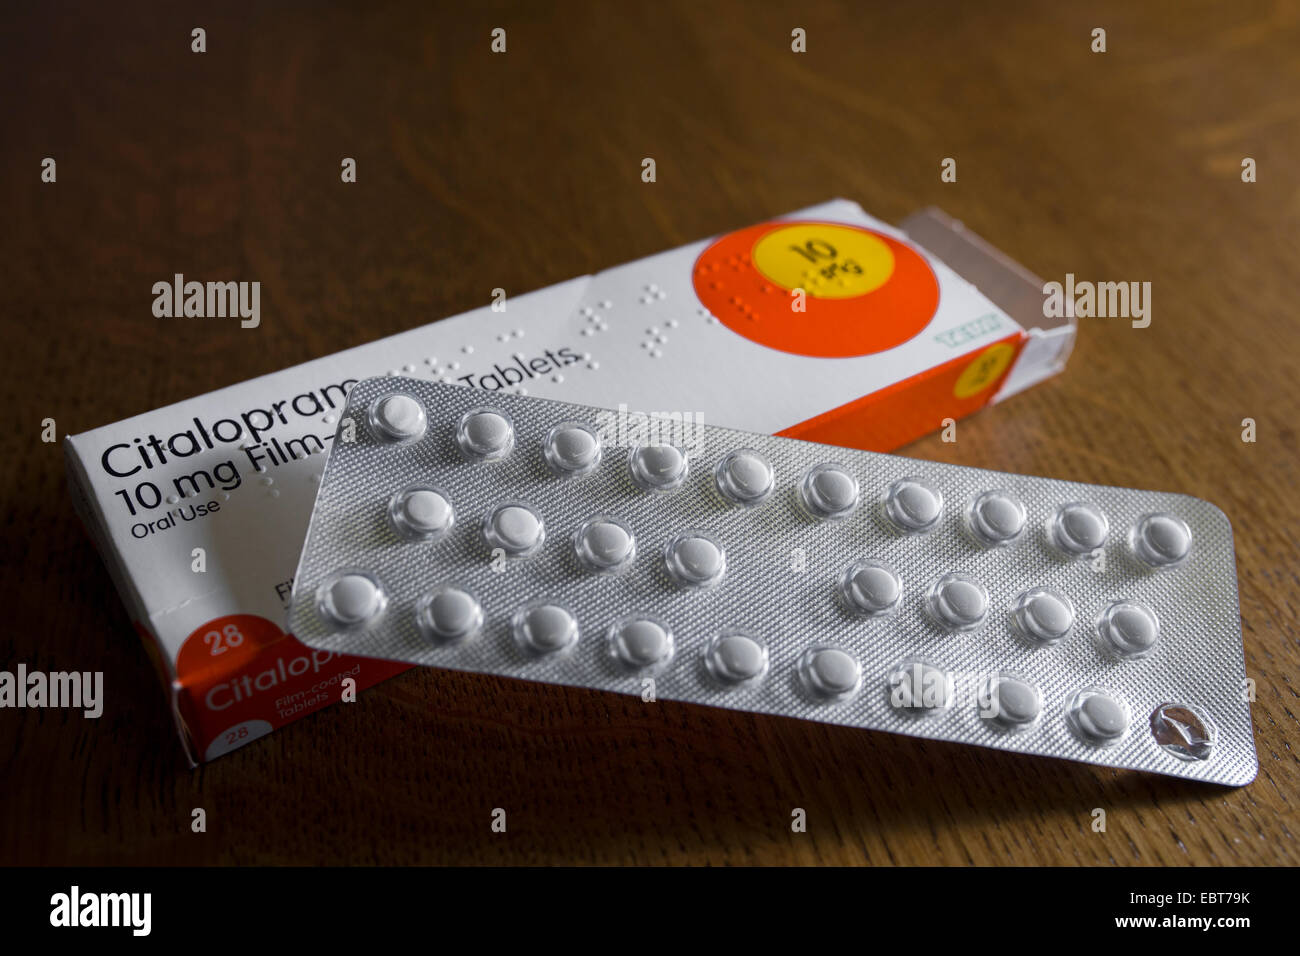 Box of Citalopram 10 mg film coated tablets. Stock Photo